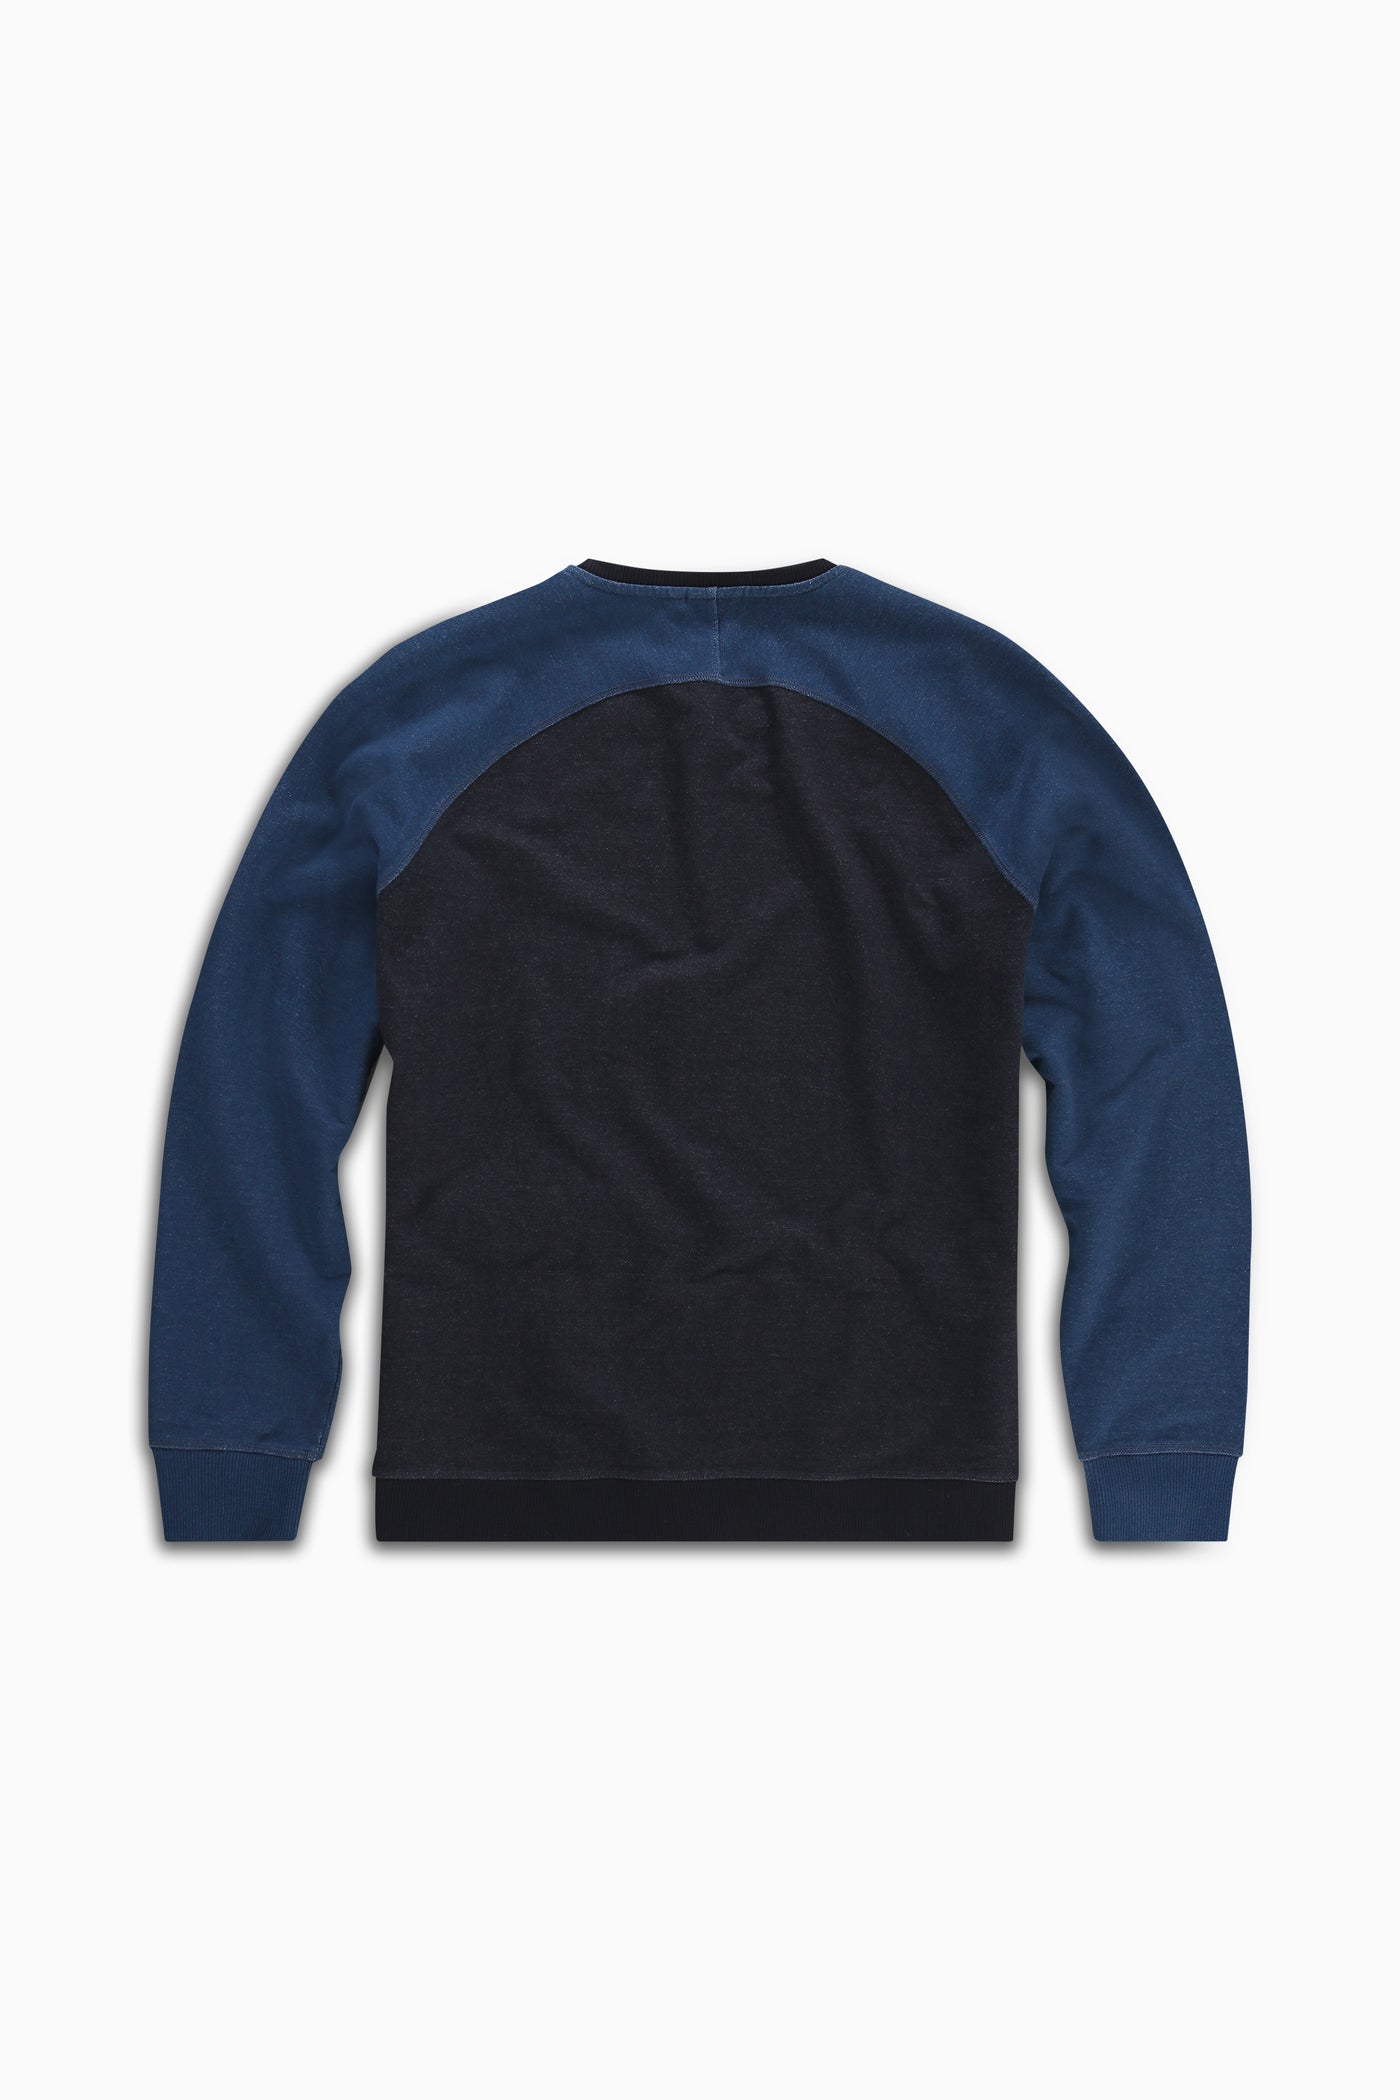 Sweater Two Tone Indigo Dyed